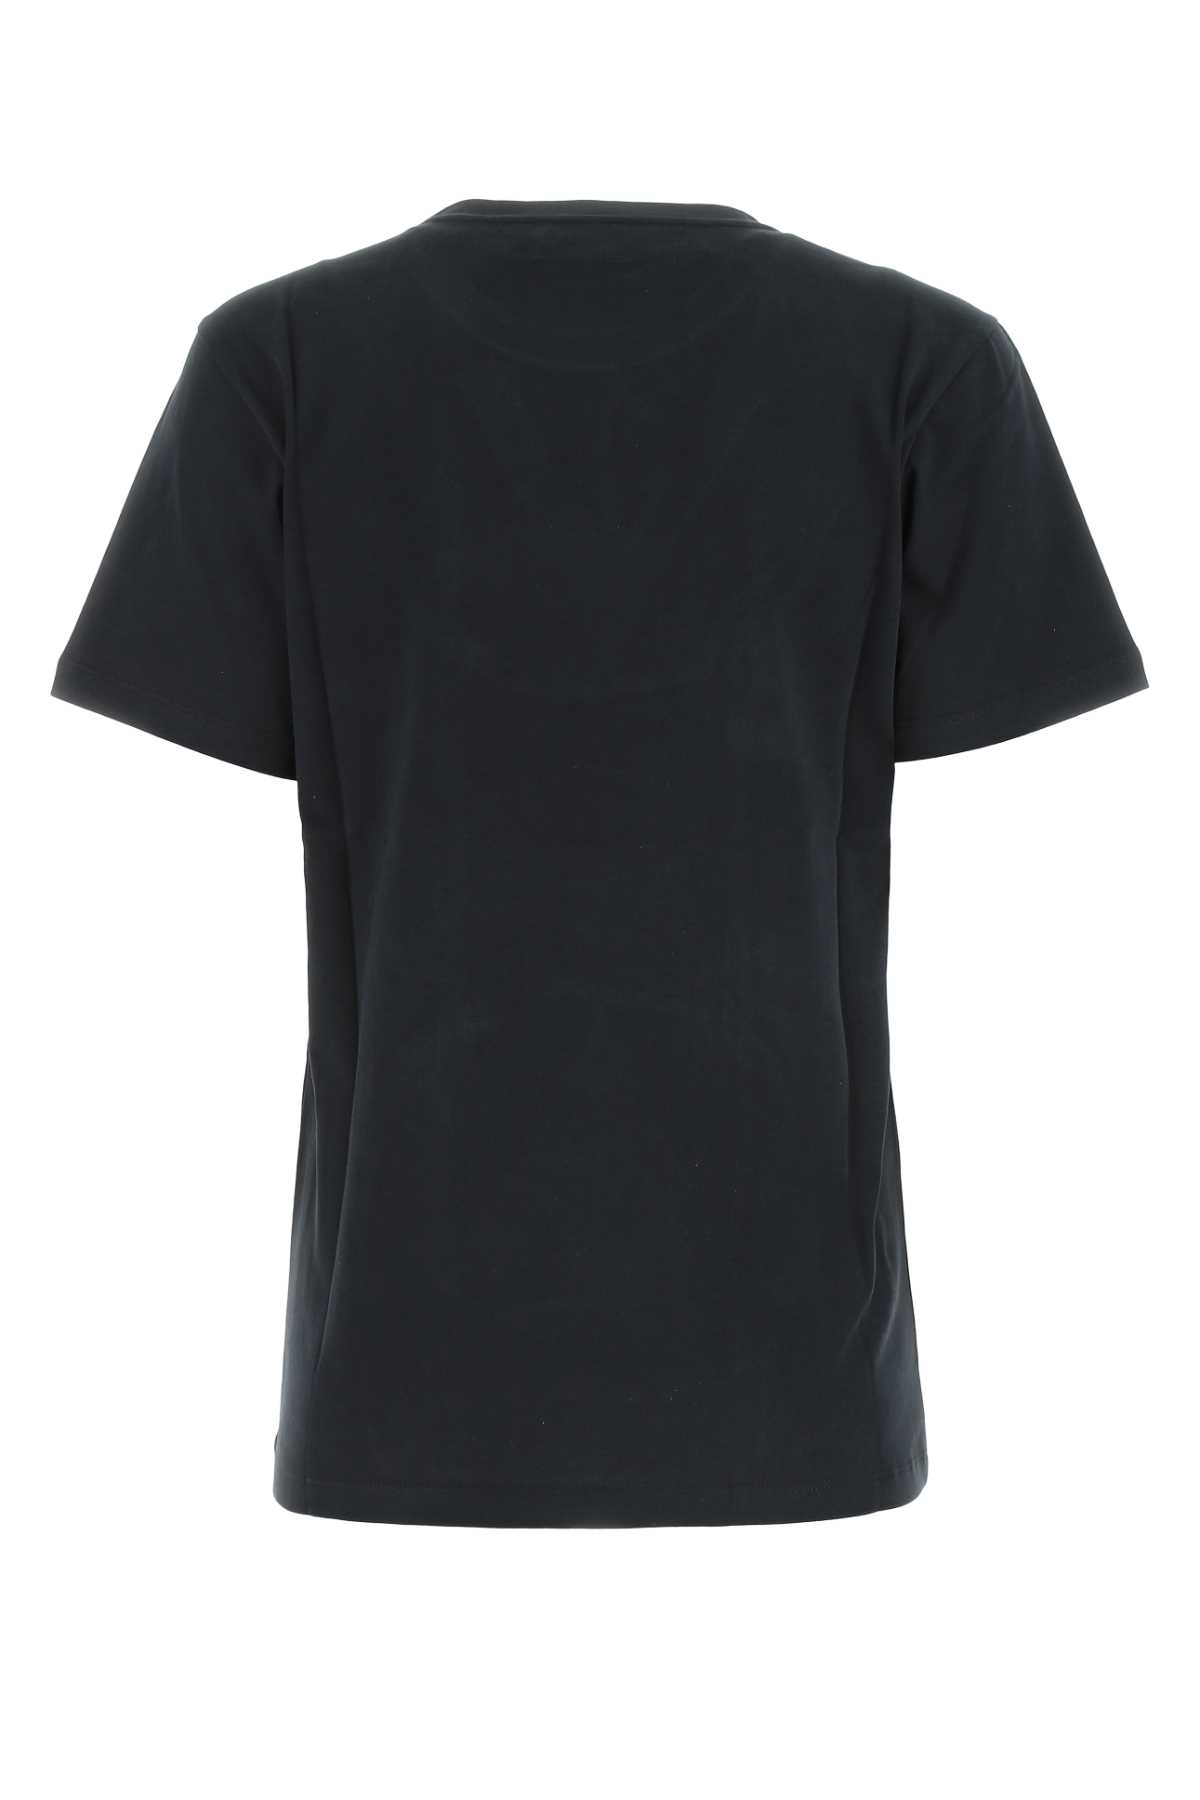 Marant Etoile Black Cotton Enna T-shirt